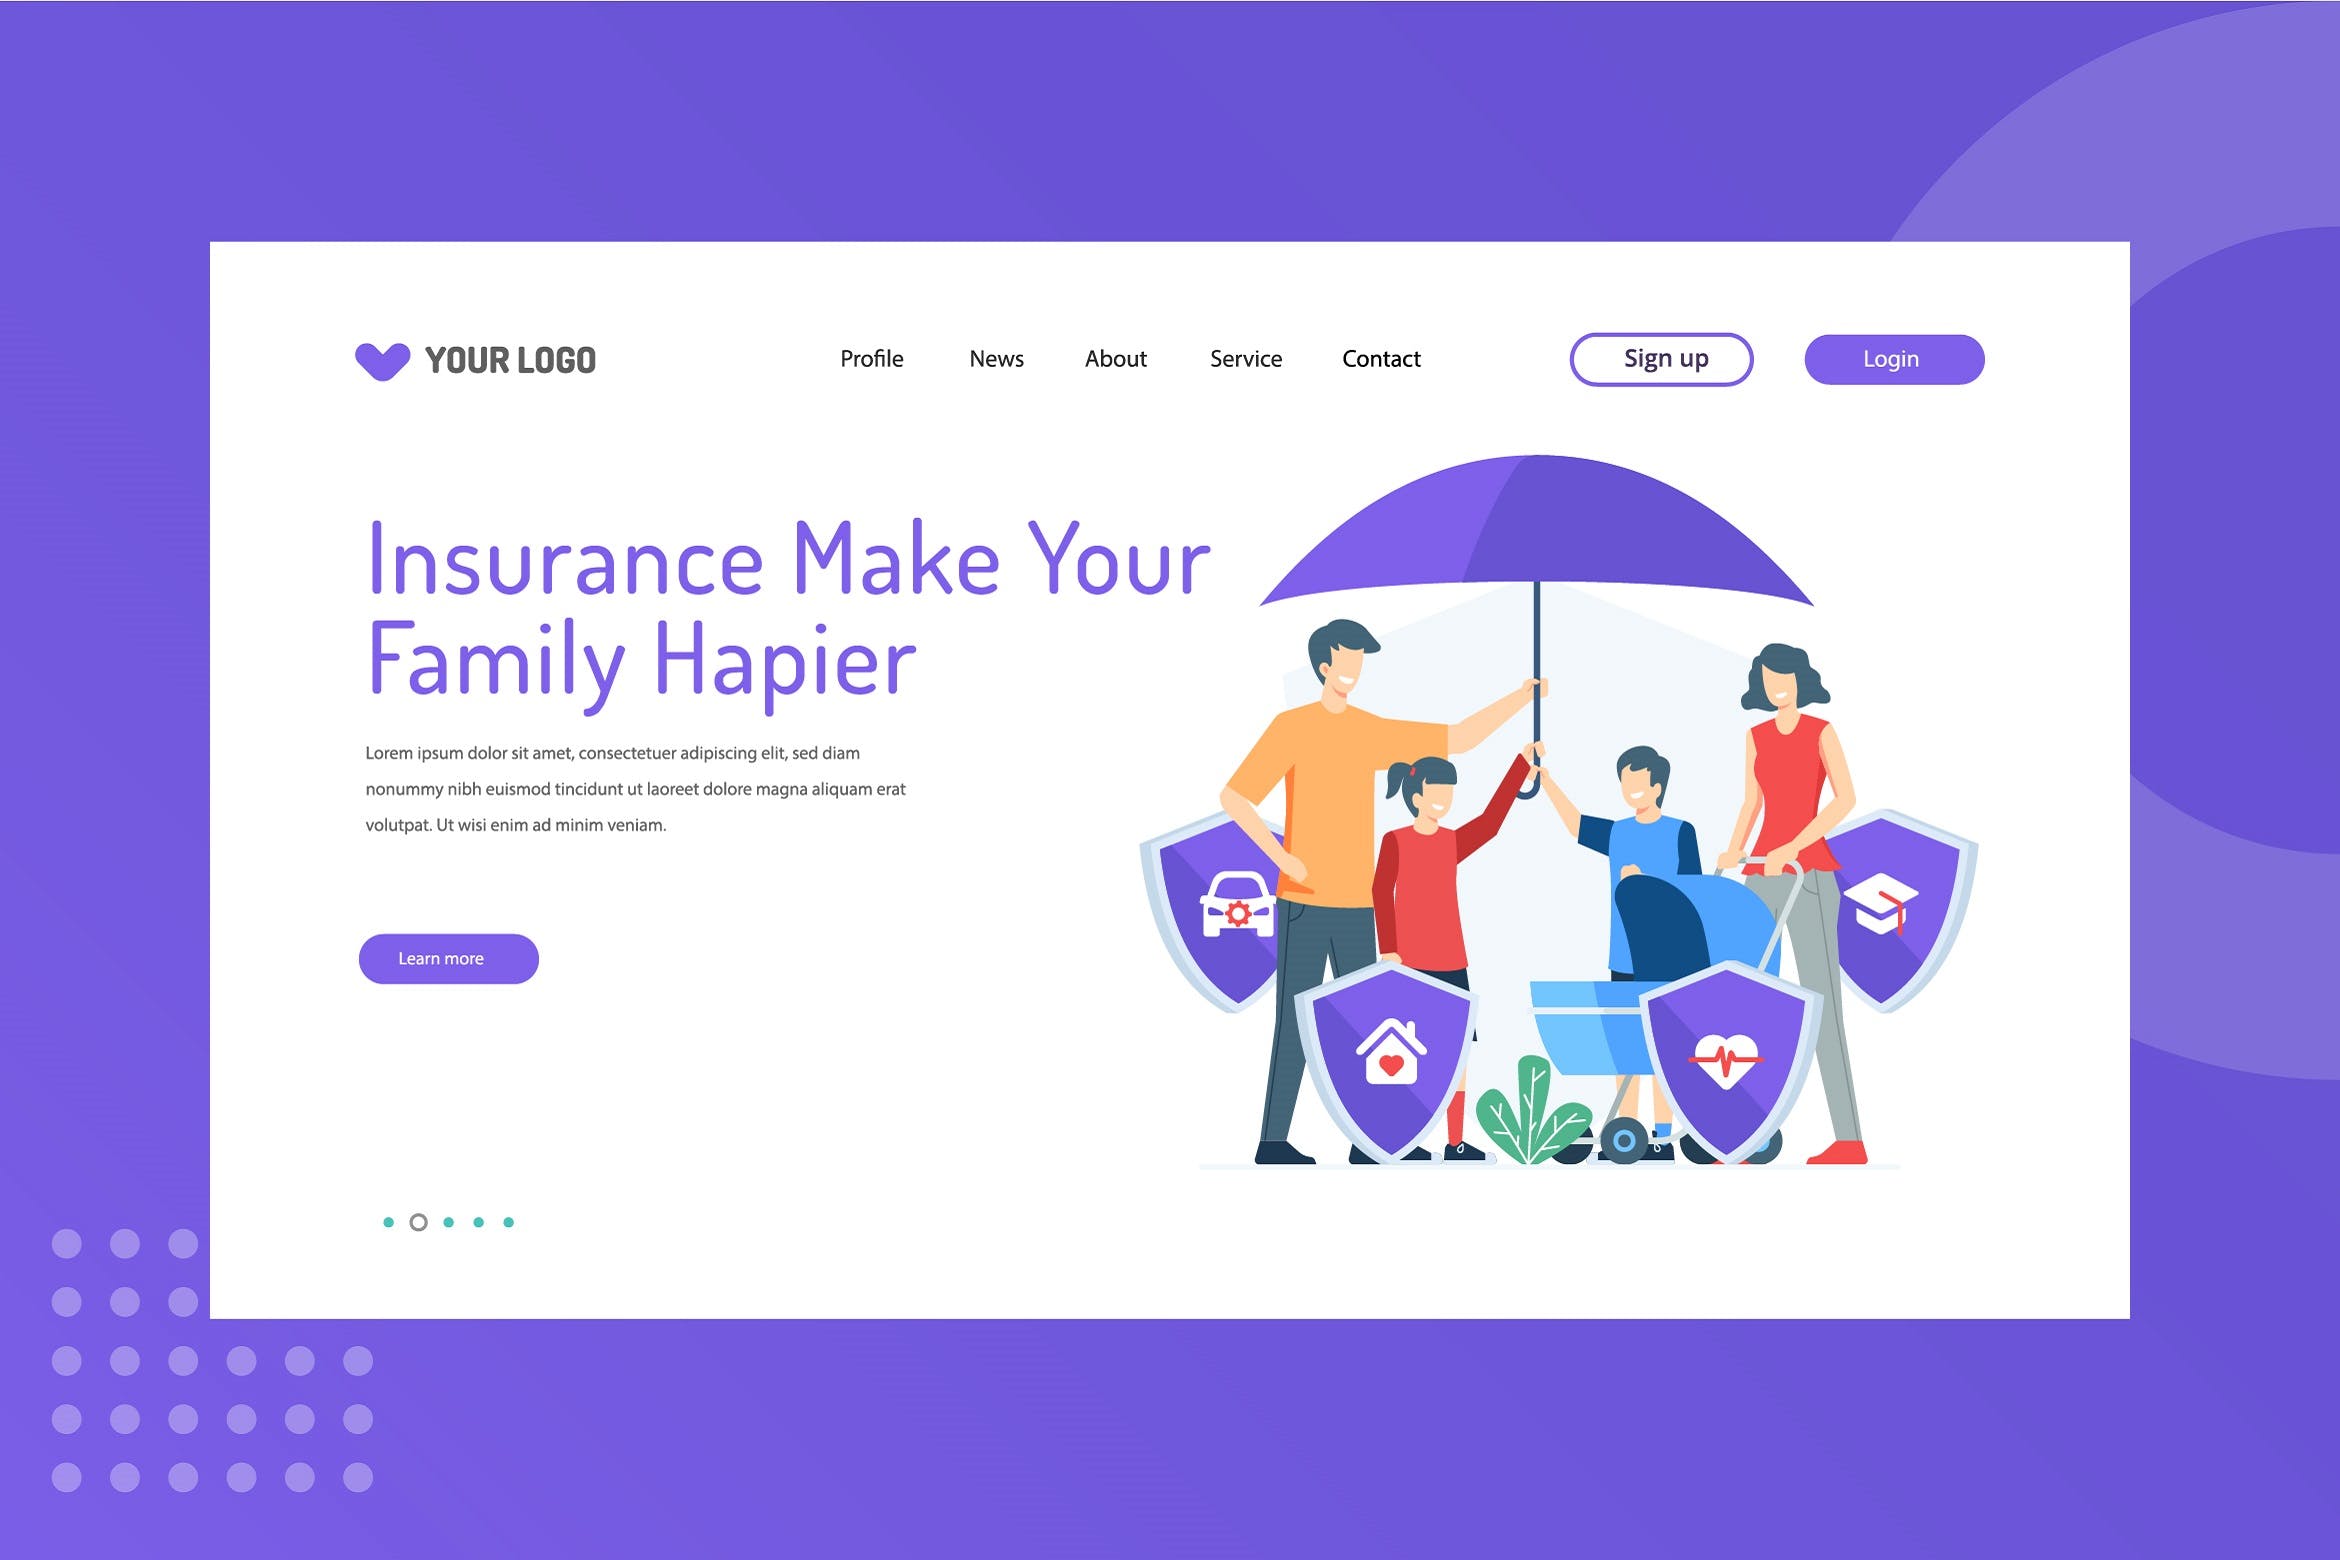 网站设计家庭保险服务主题插画模板 Insurance Make Your Family Happier Landing Page设计素材模板